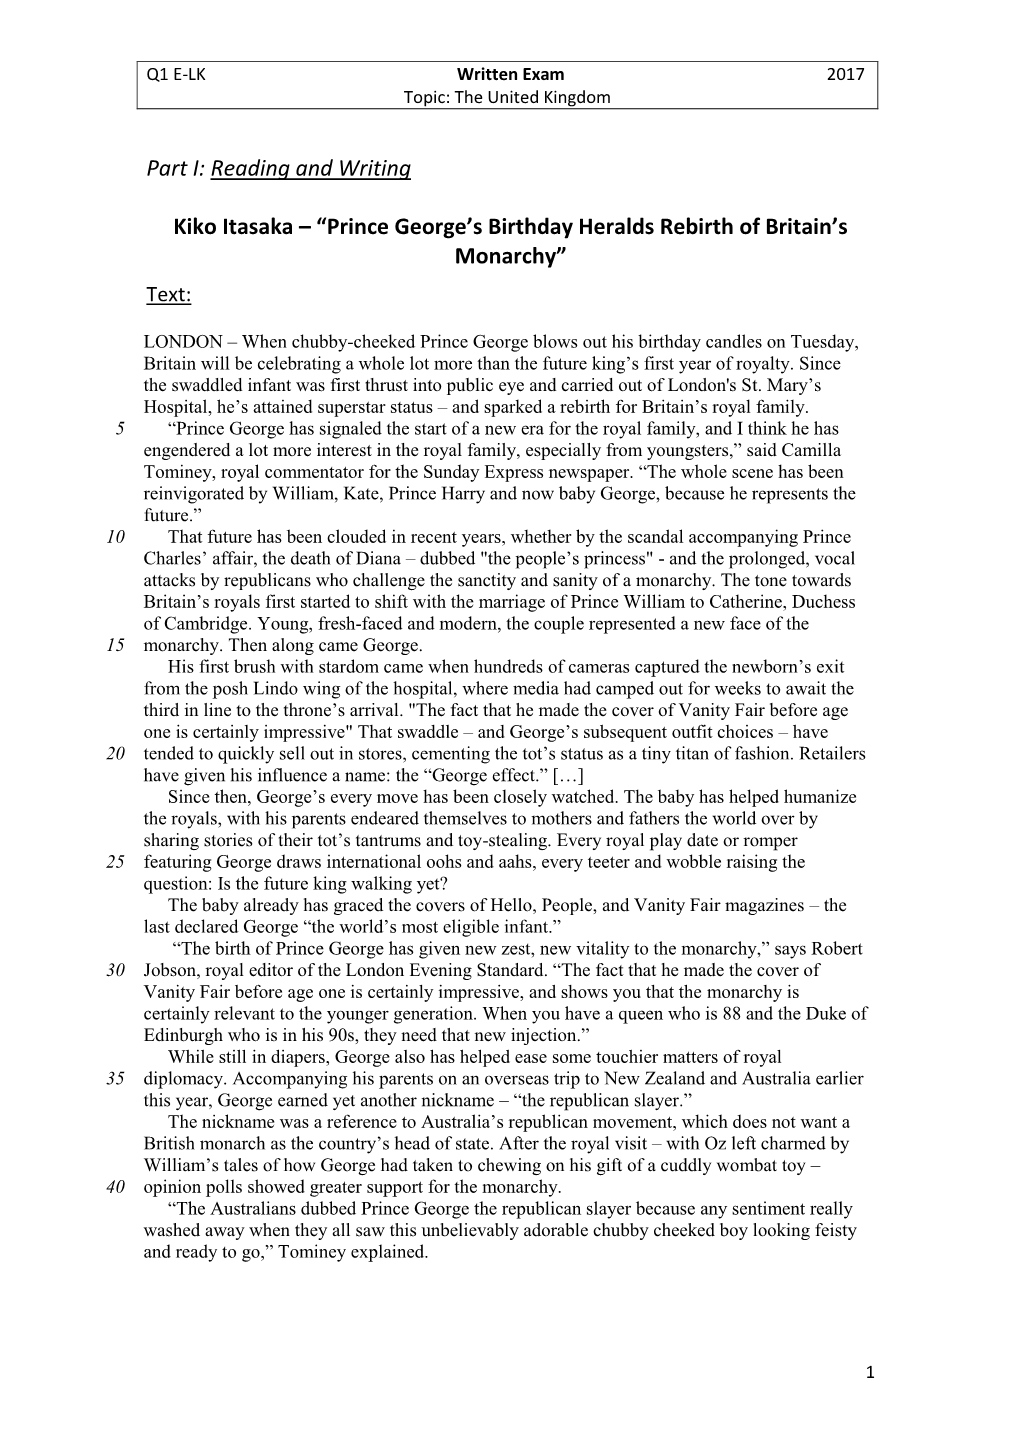 Part I: Reading and Writing Kiko Itasaka – “Prince George's Birthday Heralds Rebirth of Britain's Monarchy”